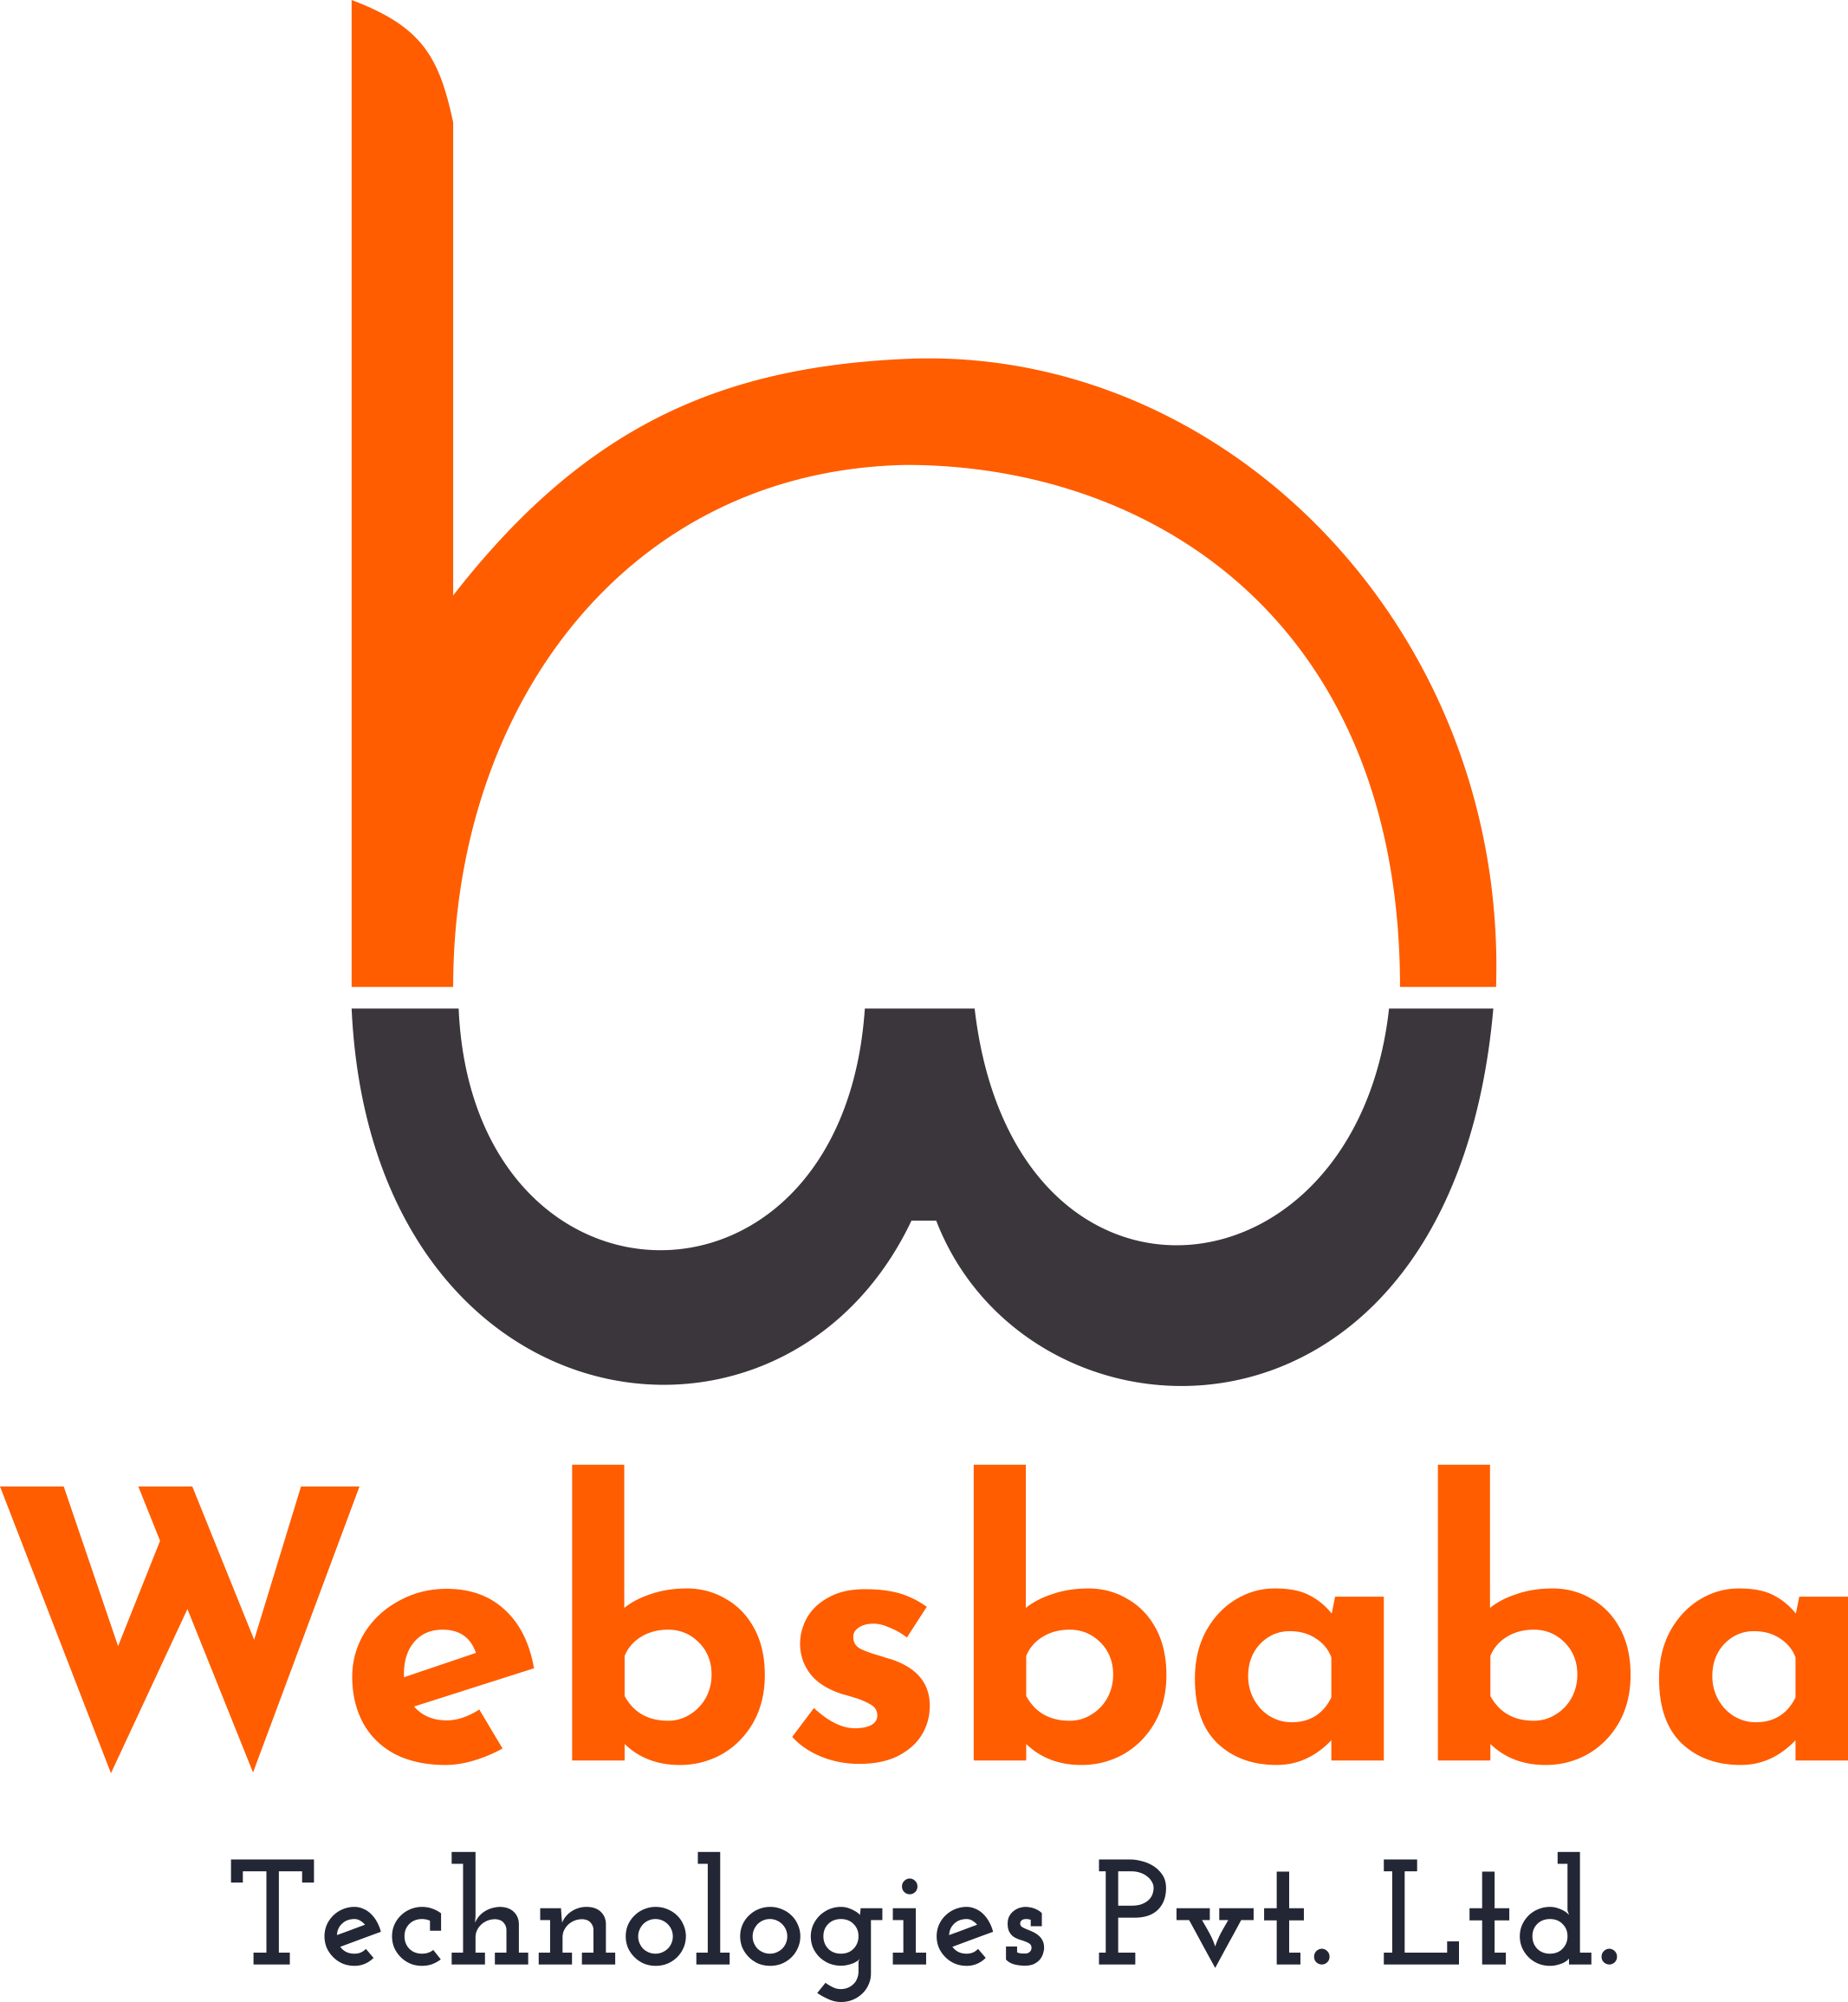 Websbaba